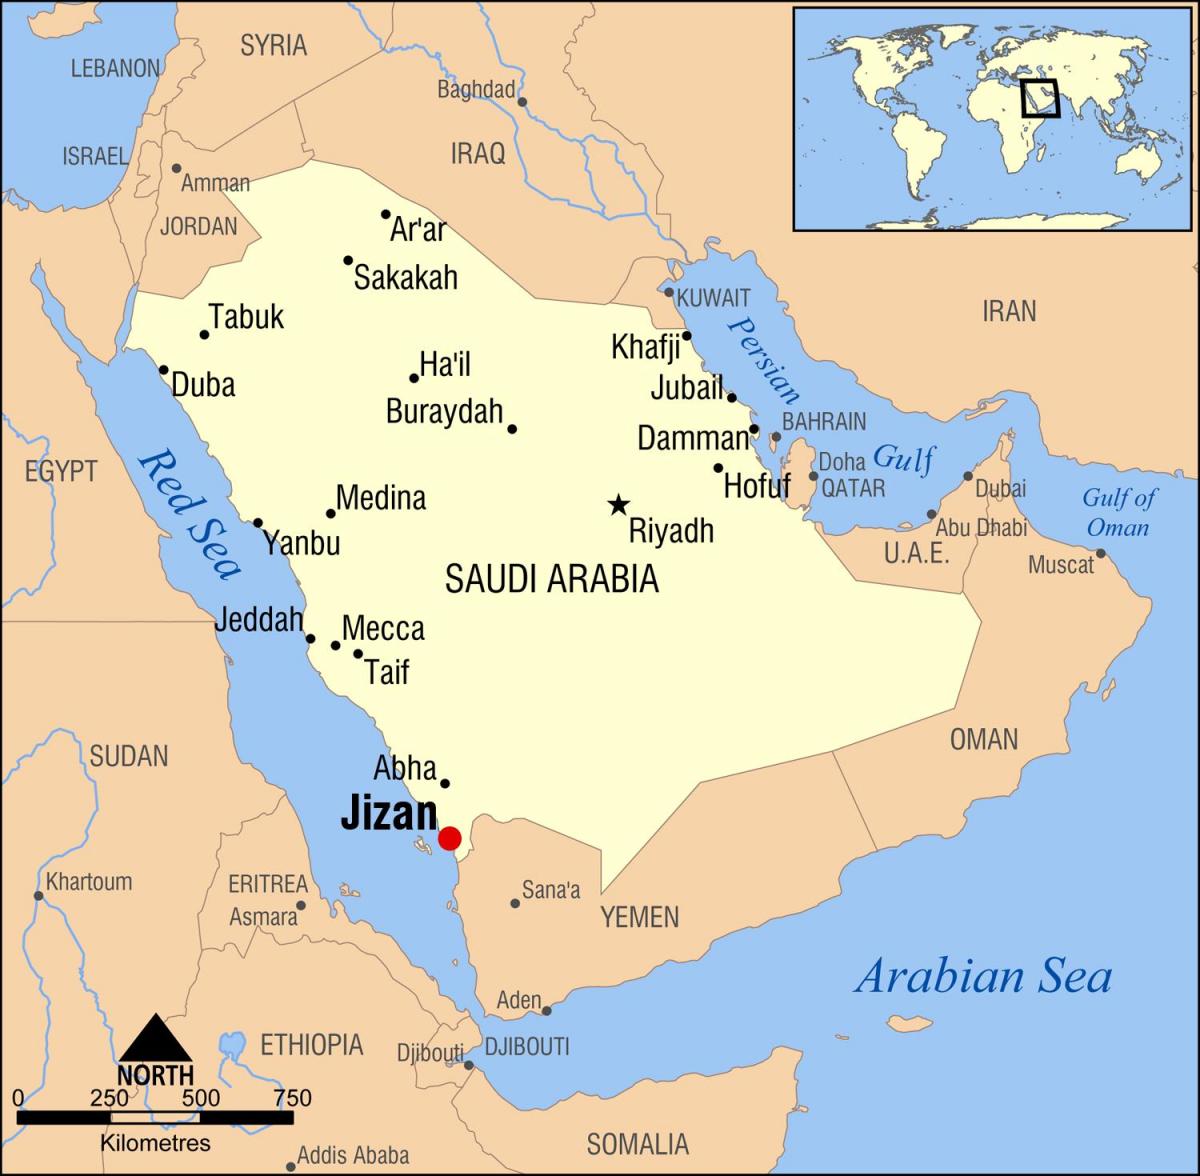 jizan KSA мапа